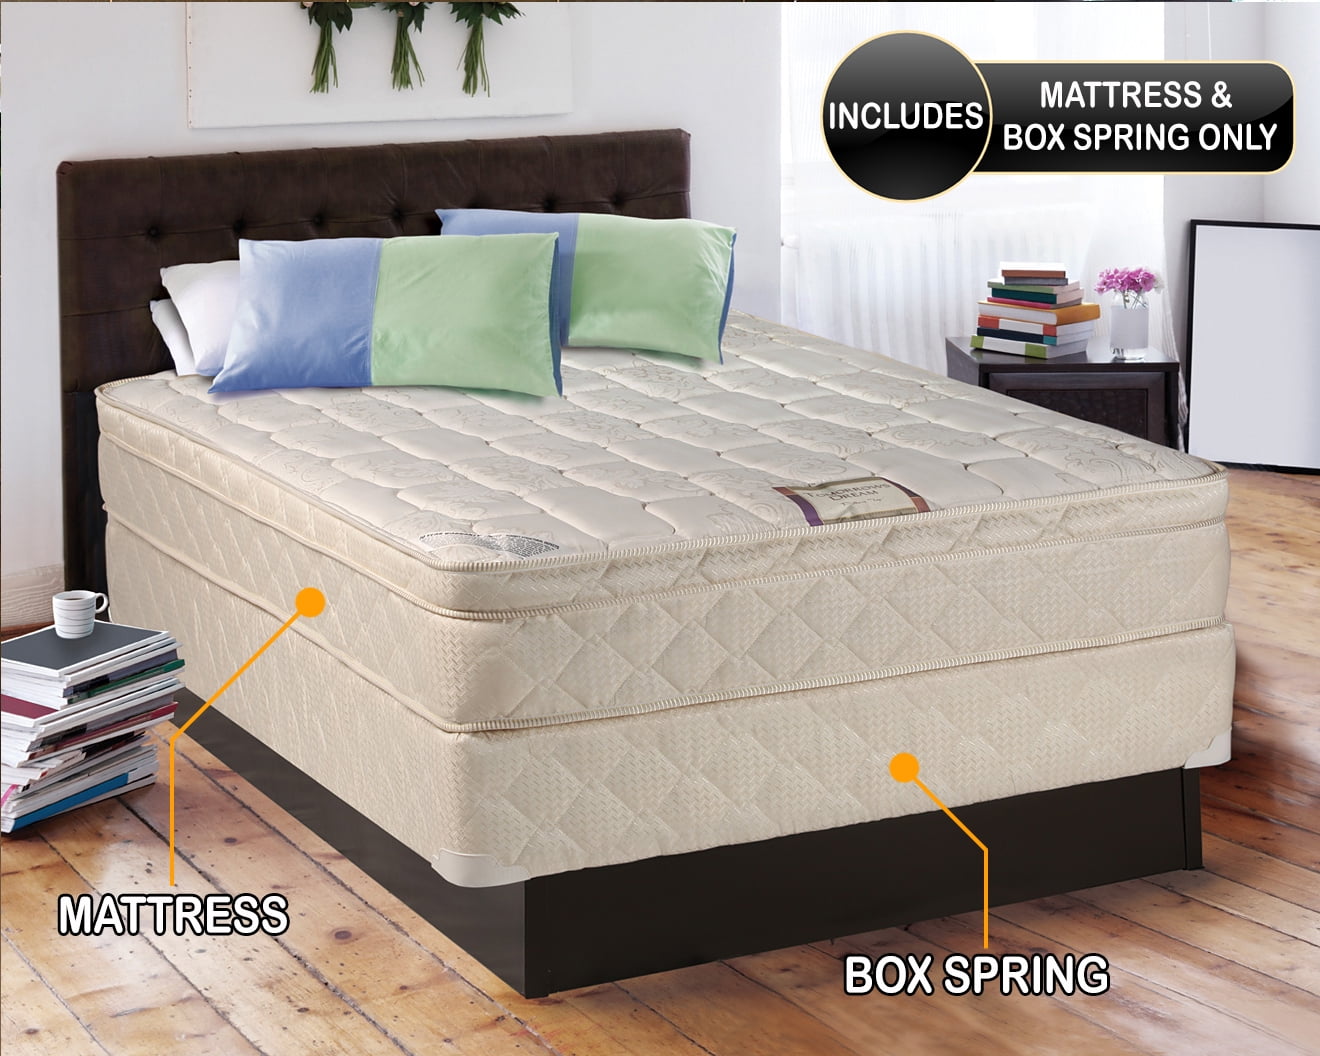 cheap mattress and box spring set